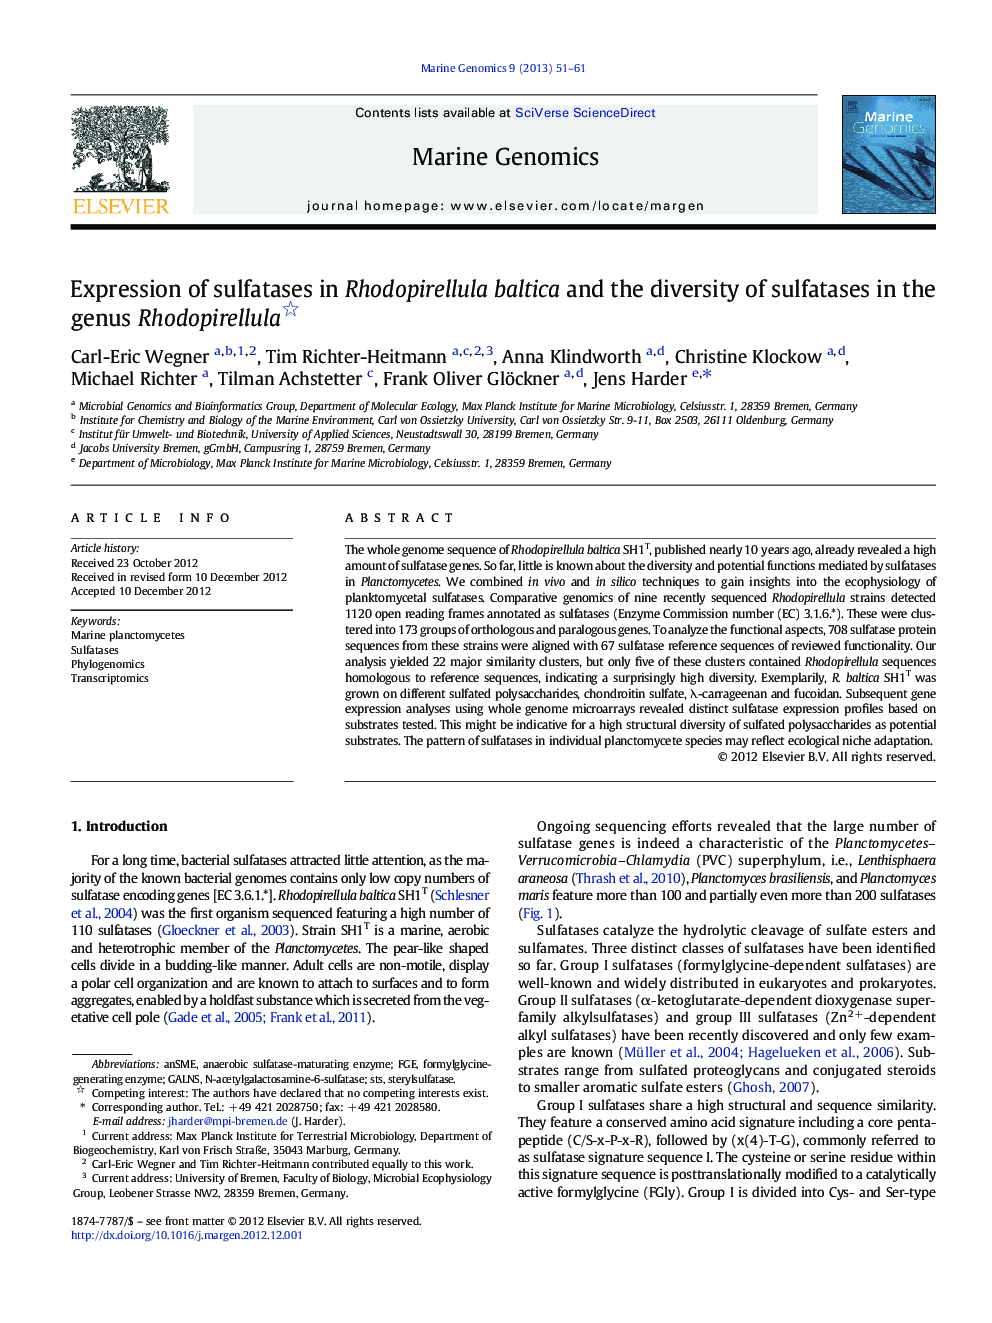 Expression of sulfatases in Rhodopirellula baltica and the diversity of sulfatases in the genus Rhodopirellula 